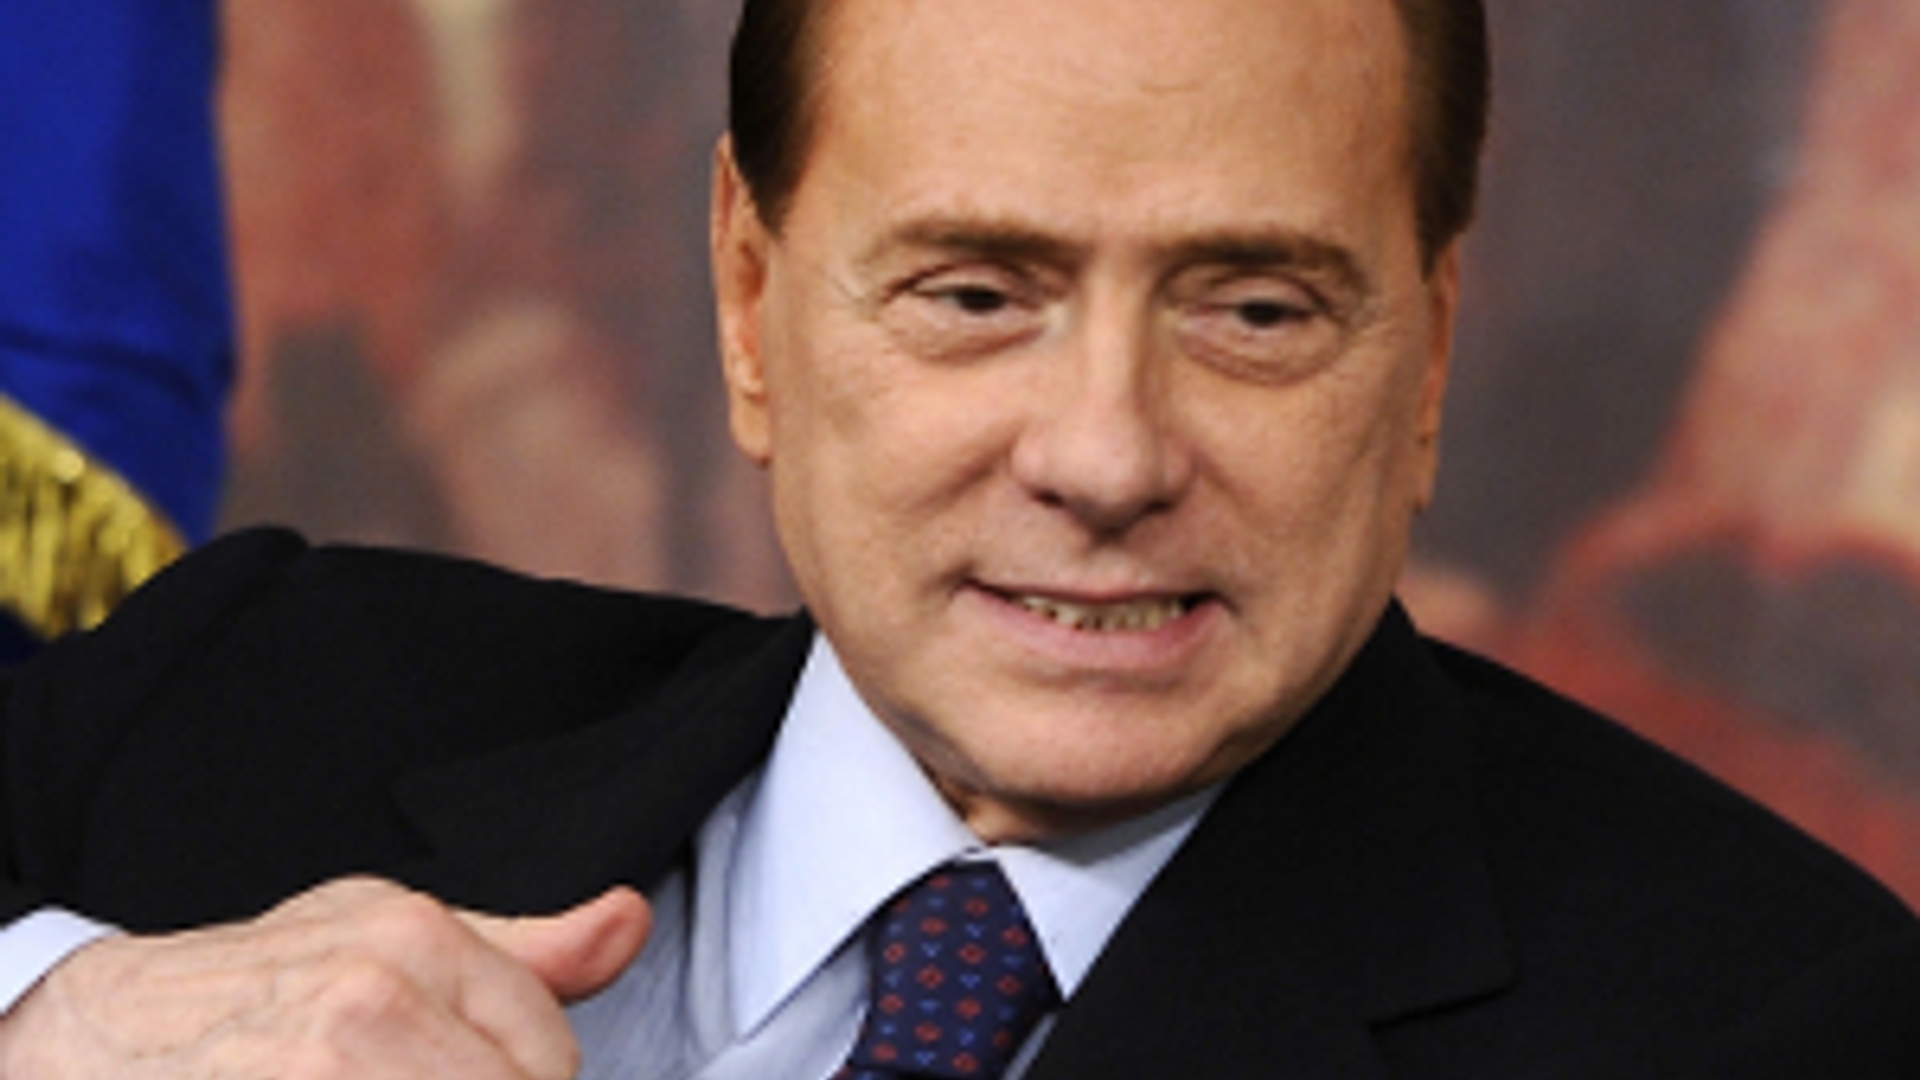 ANP-Berlusconi_duim300.jpg